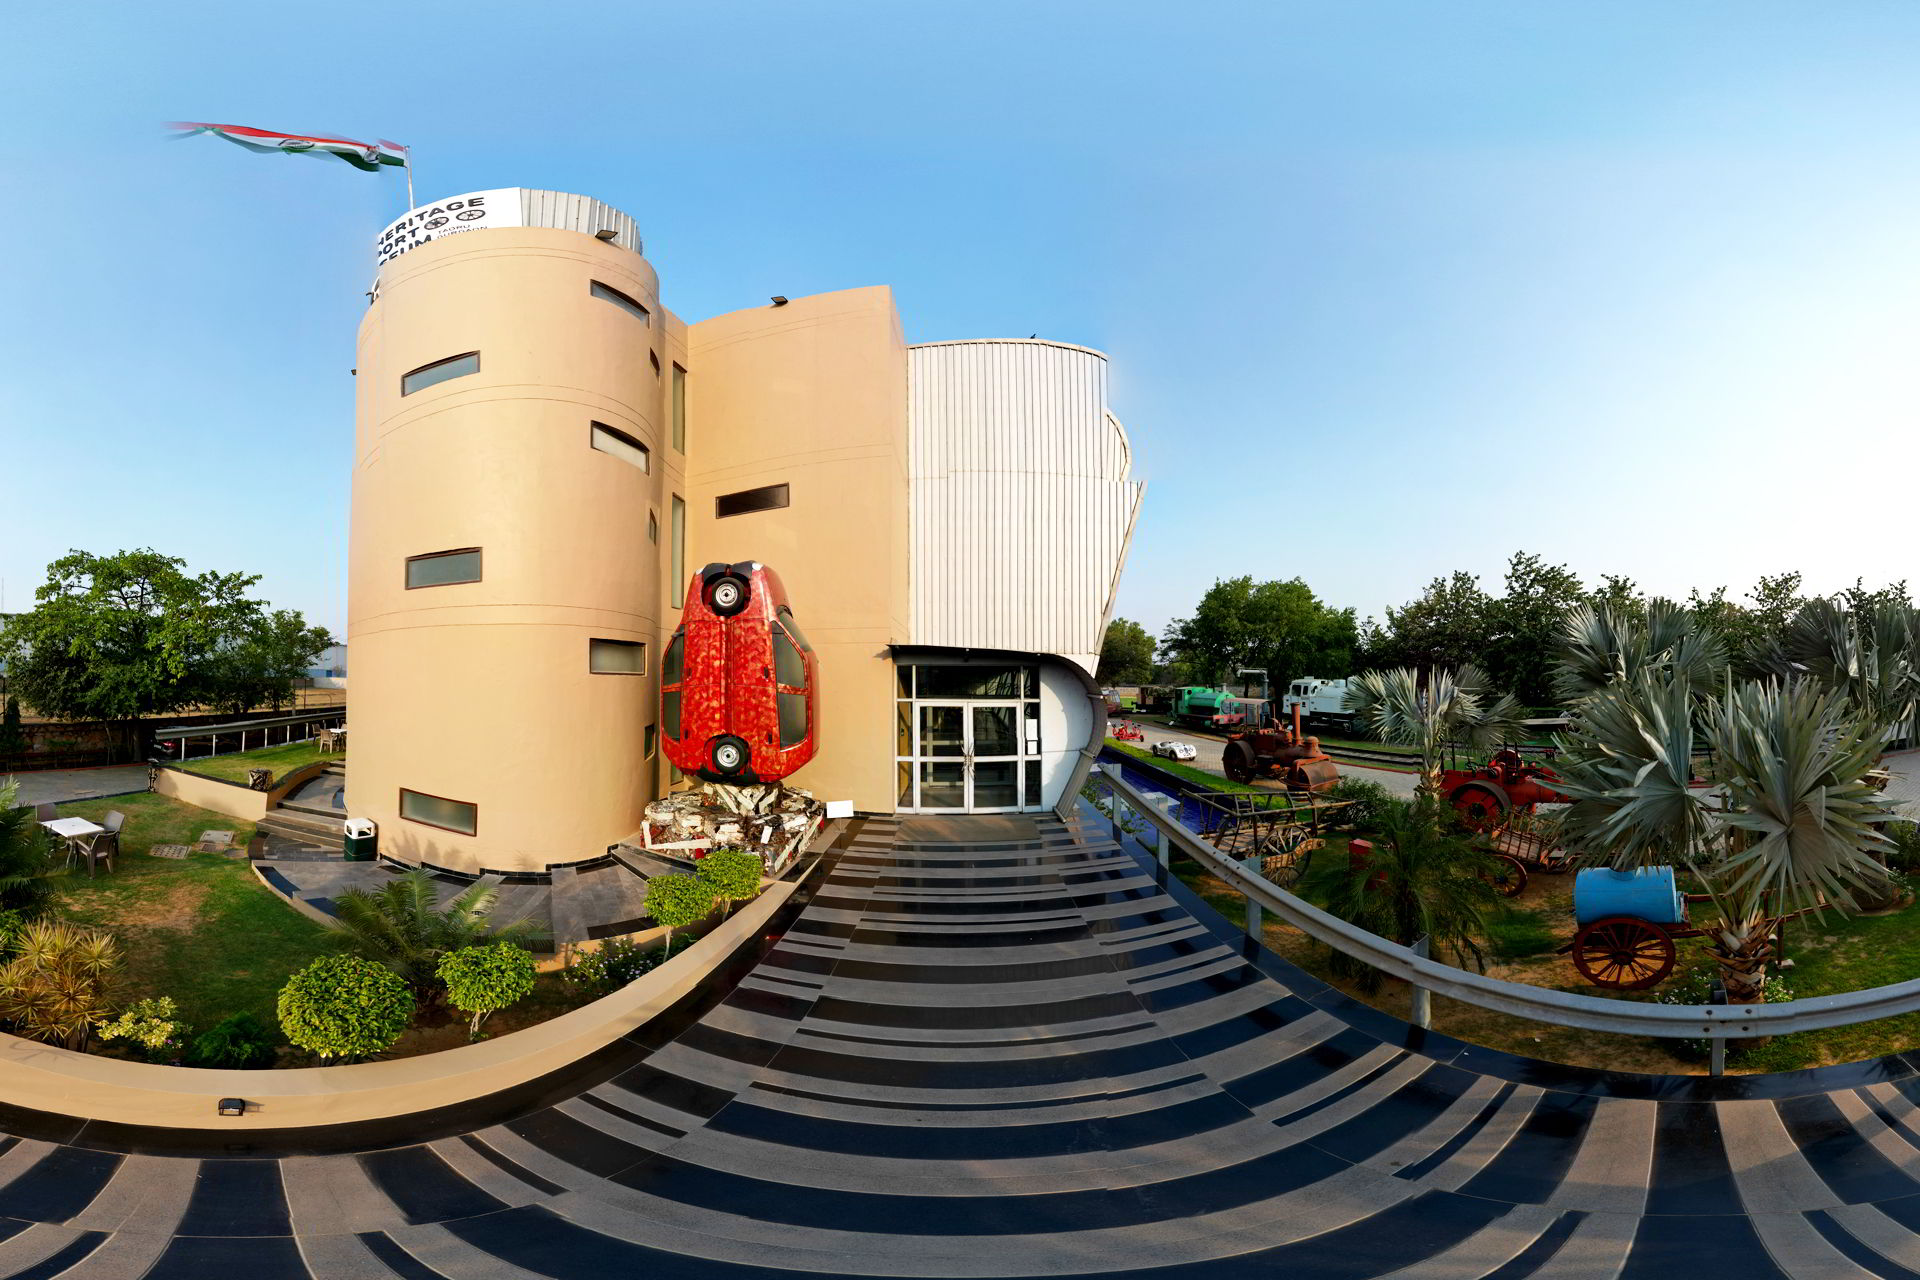 360 Virtual Tour of Heritage Transport Museum (Manesar, Gurgaon)